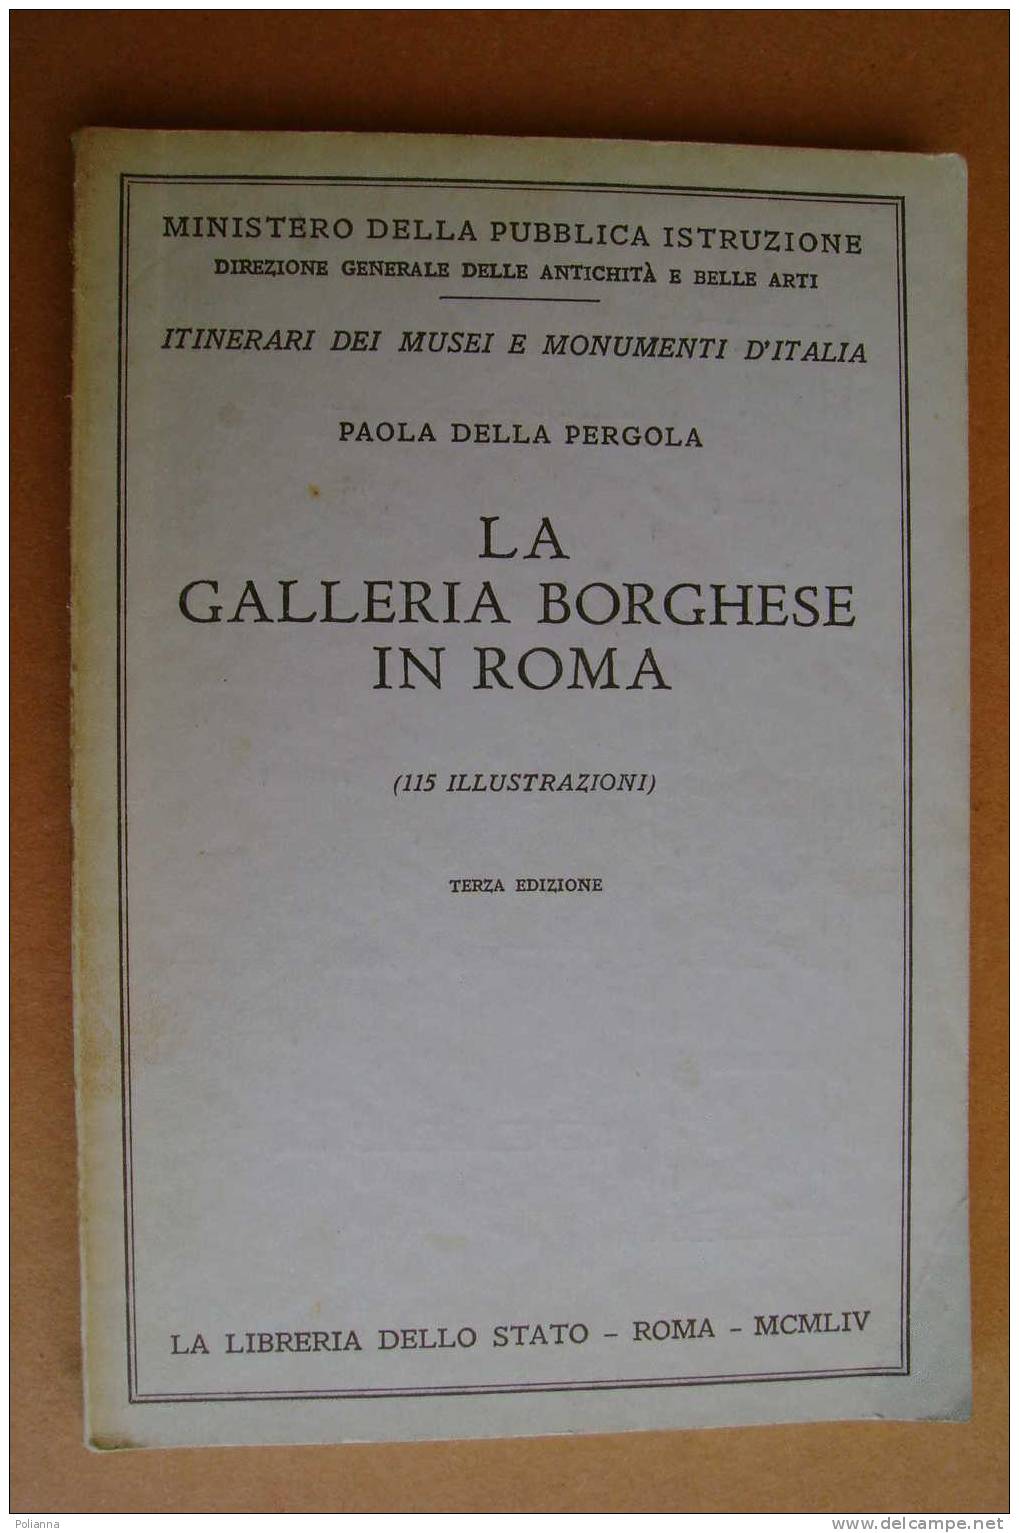 PAO/38 Della Pergola LA GALLERIA BORGHESE IN ROMA Ist.Poligrafico 1954 - Kunst, Antiek